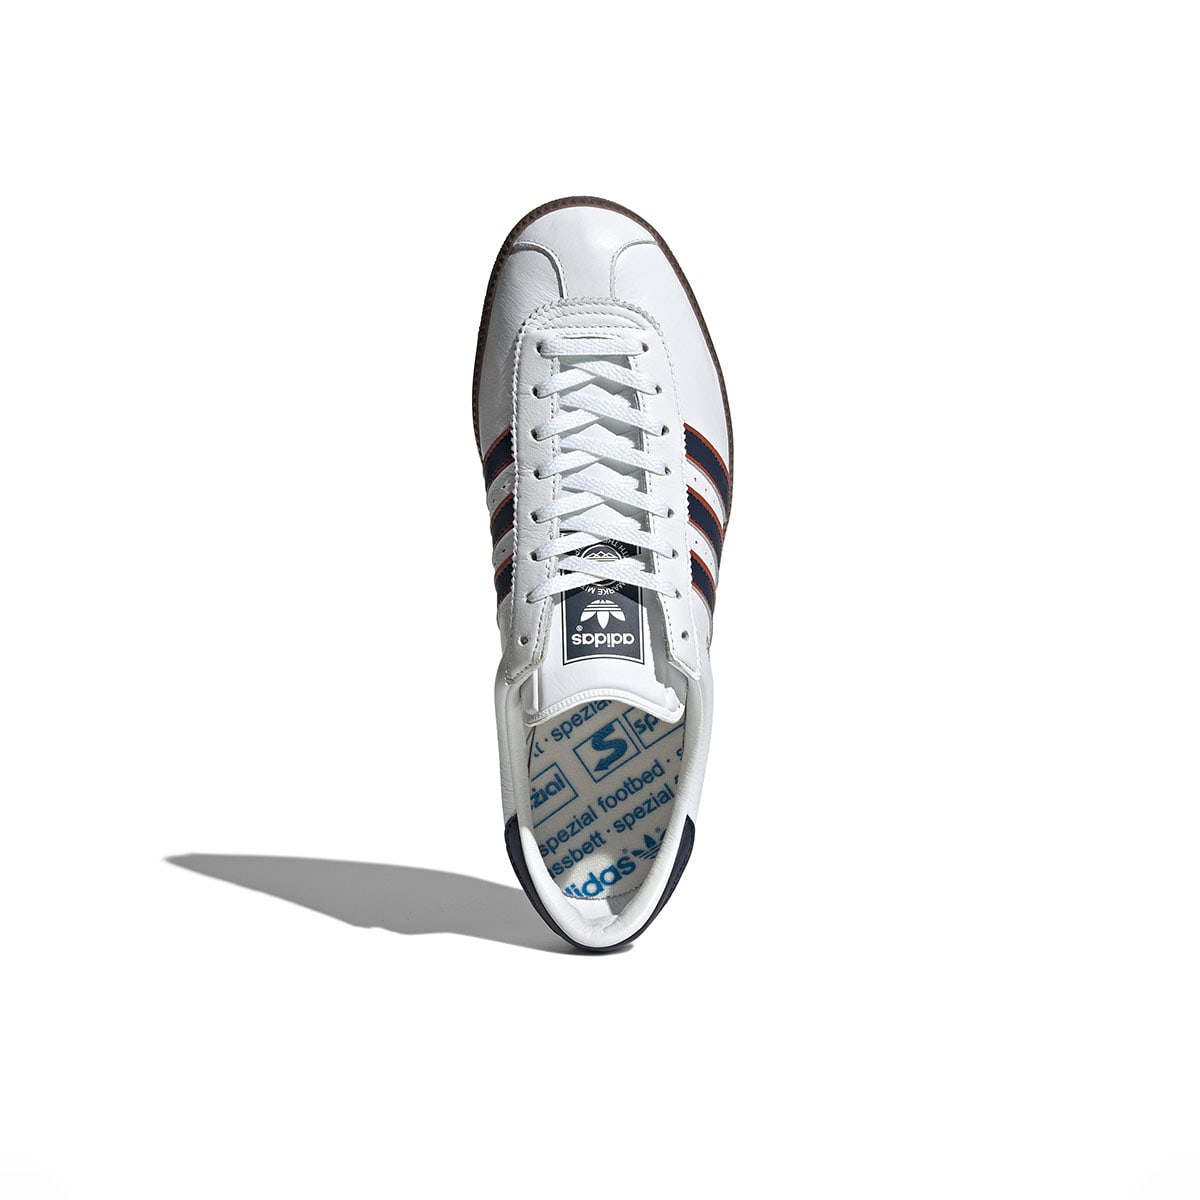 Adidas SPZL Hochelaga (White, Navy & Orange) | END. Launches